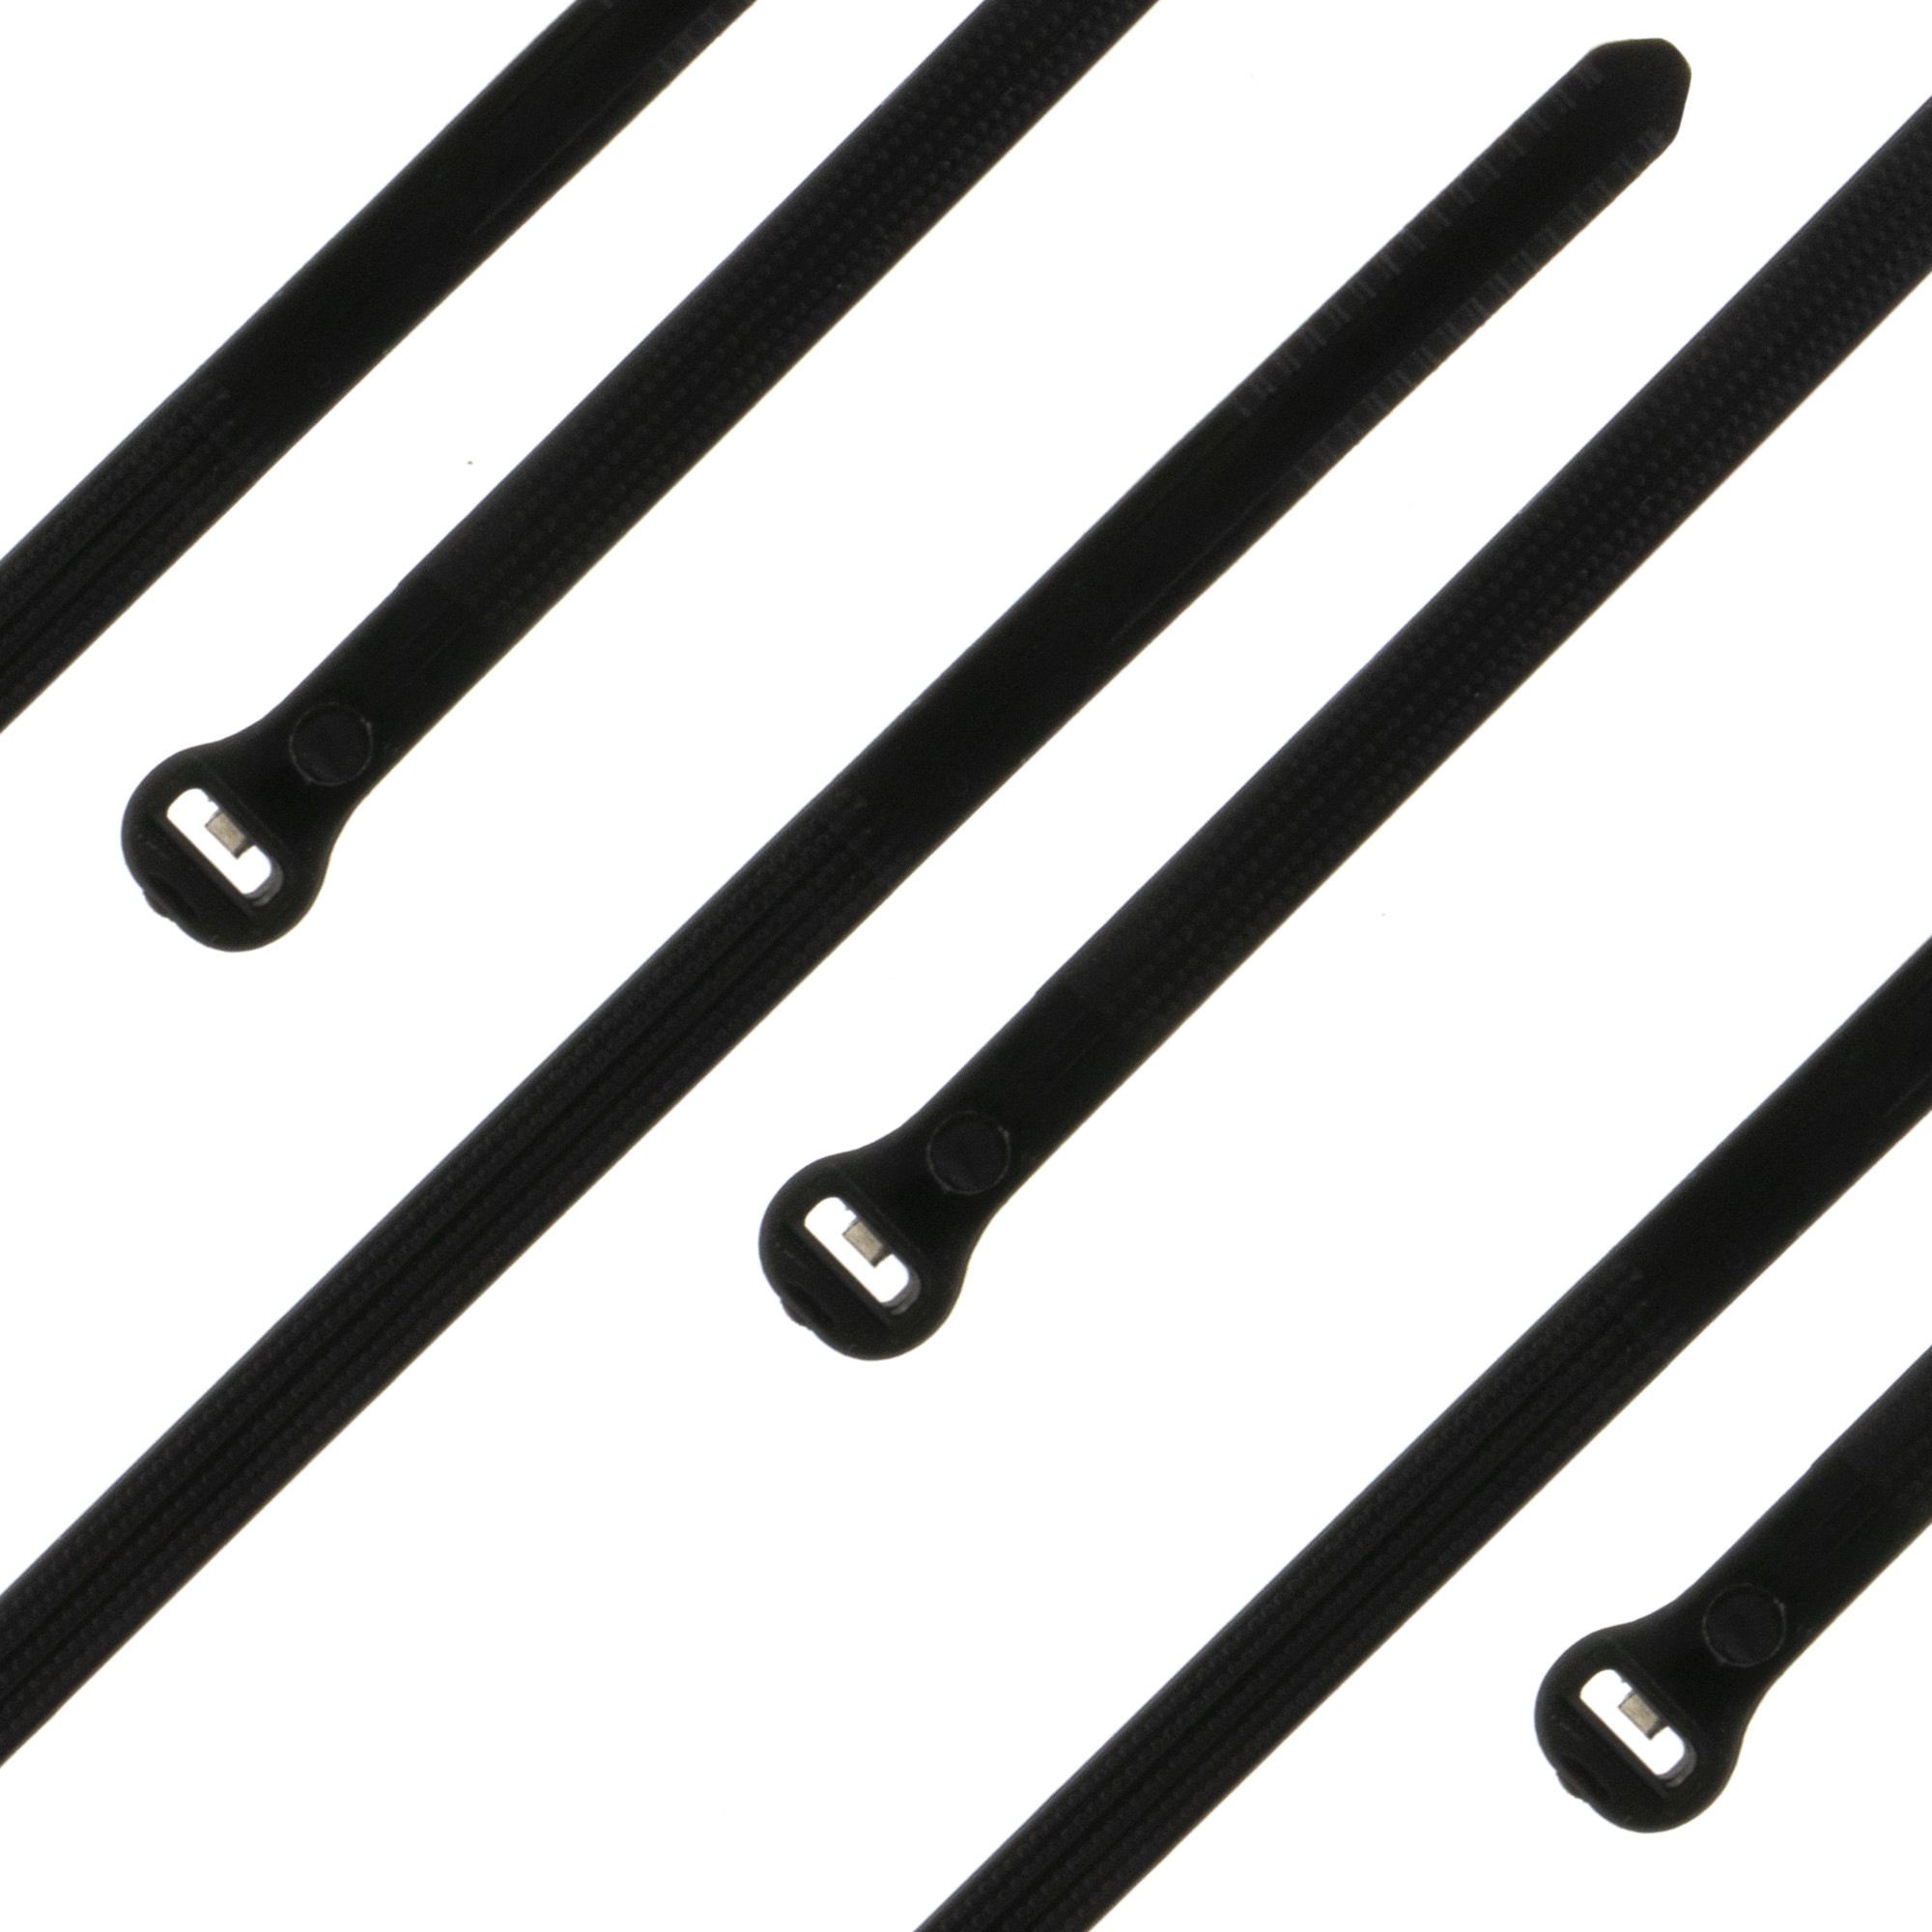 Cable tie w. metal barb lock 102 x 2,4mm, 100PCS